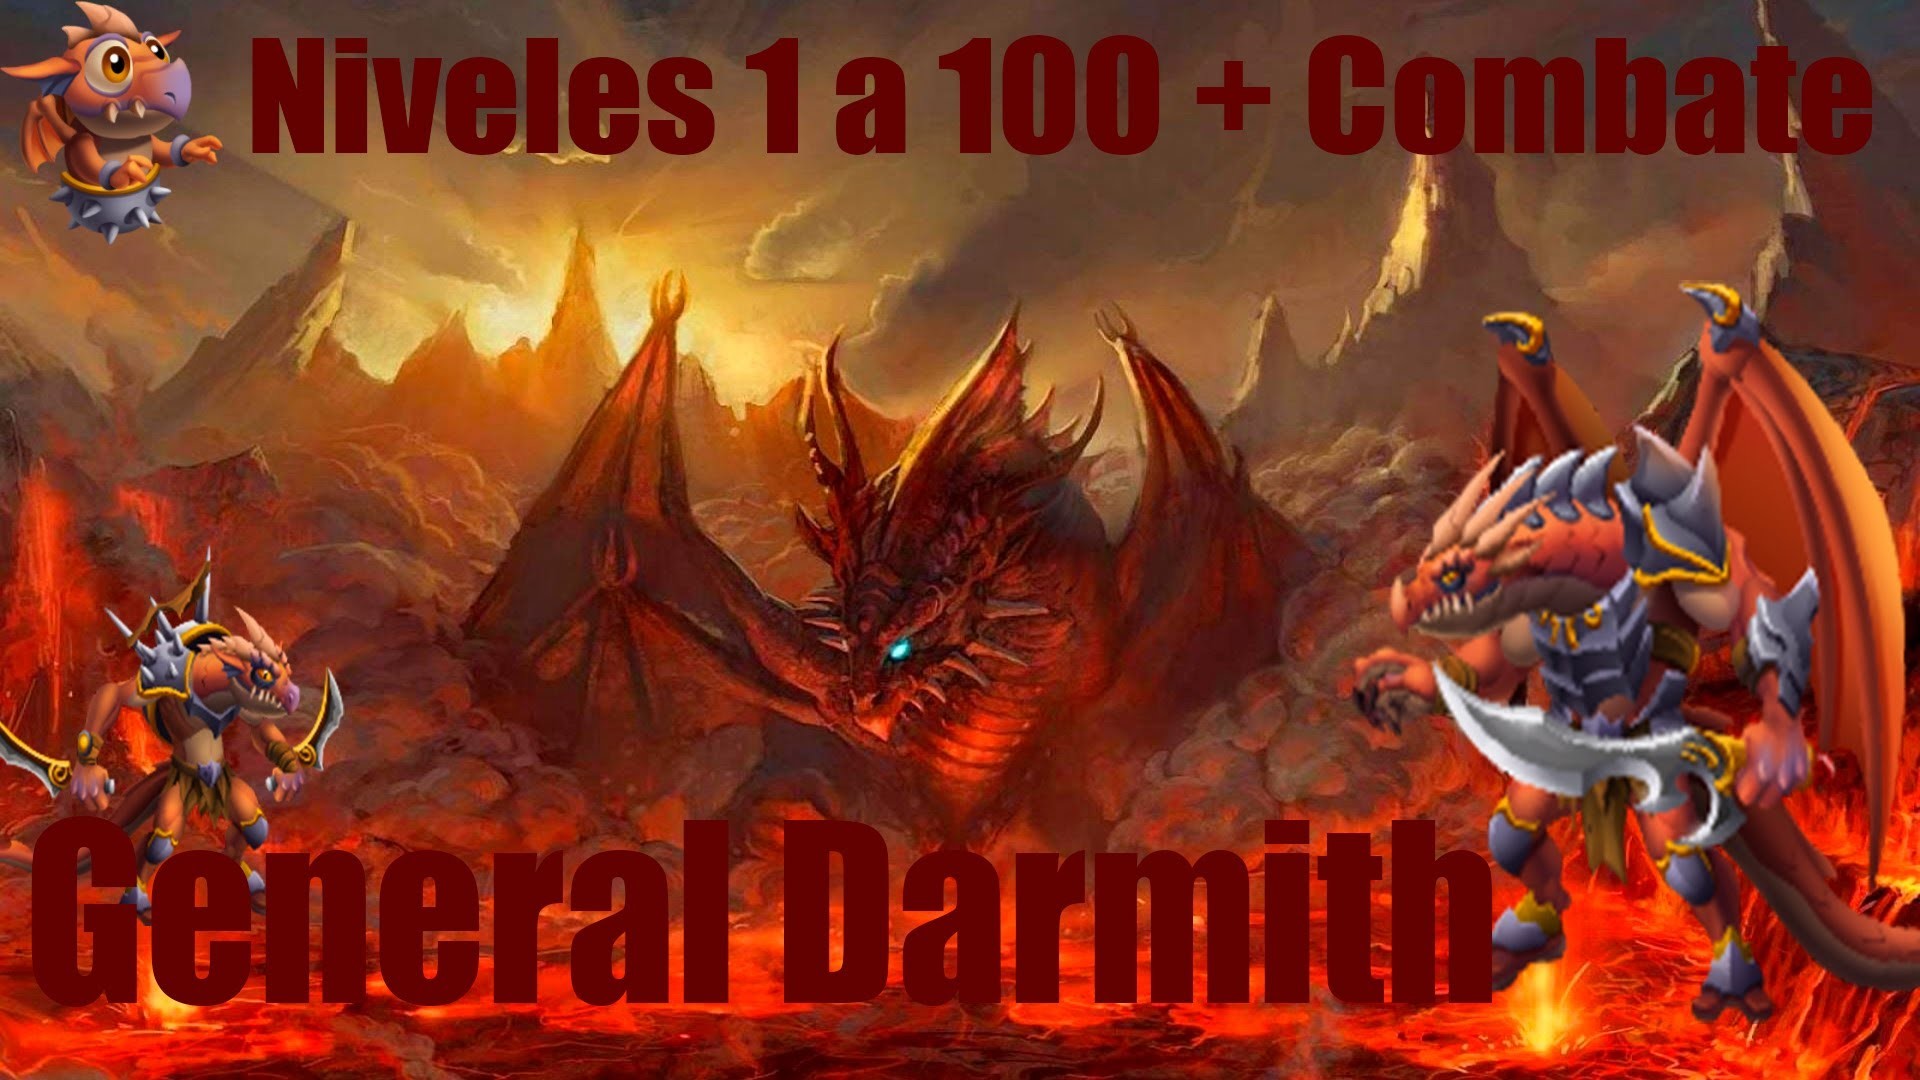 1920x1080 General Darmith 1 al 100 + Combate | Monster Legends